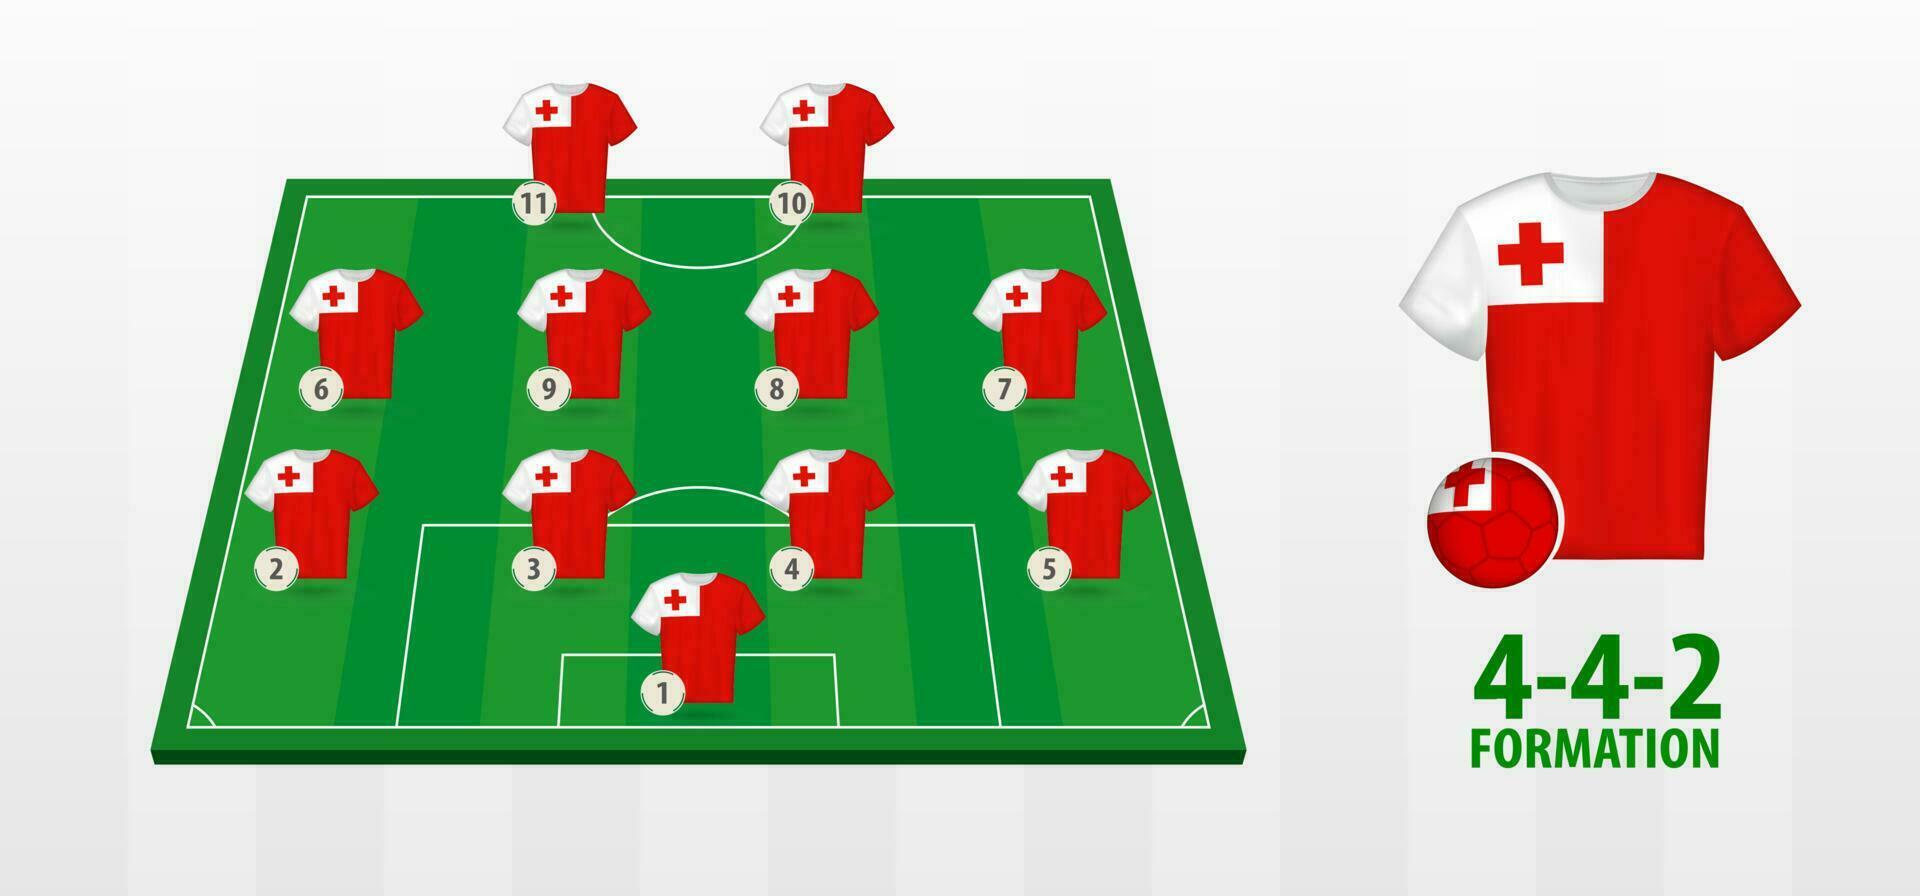 Tonga National Football Team Formation on Football Field. vector